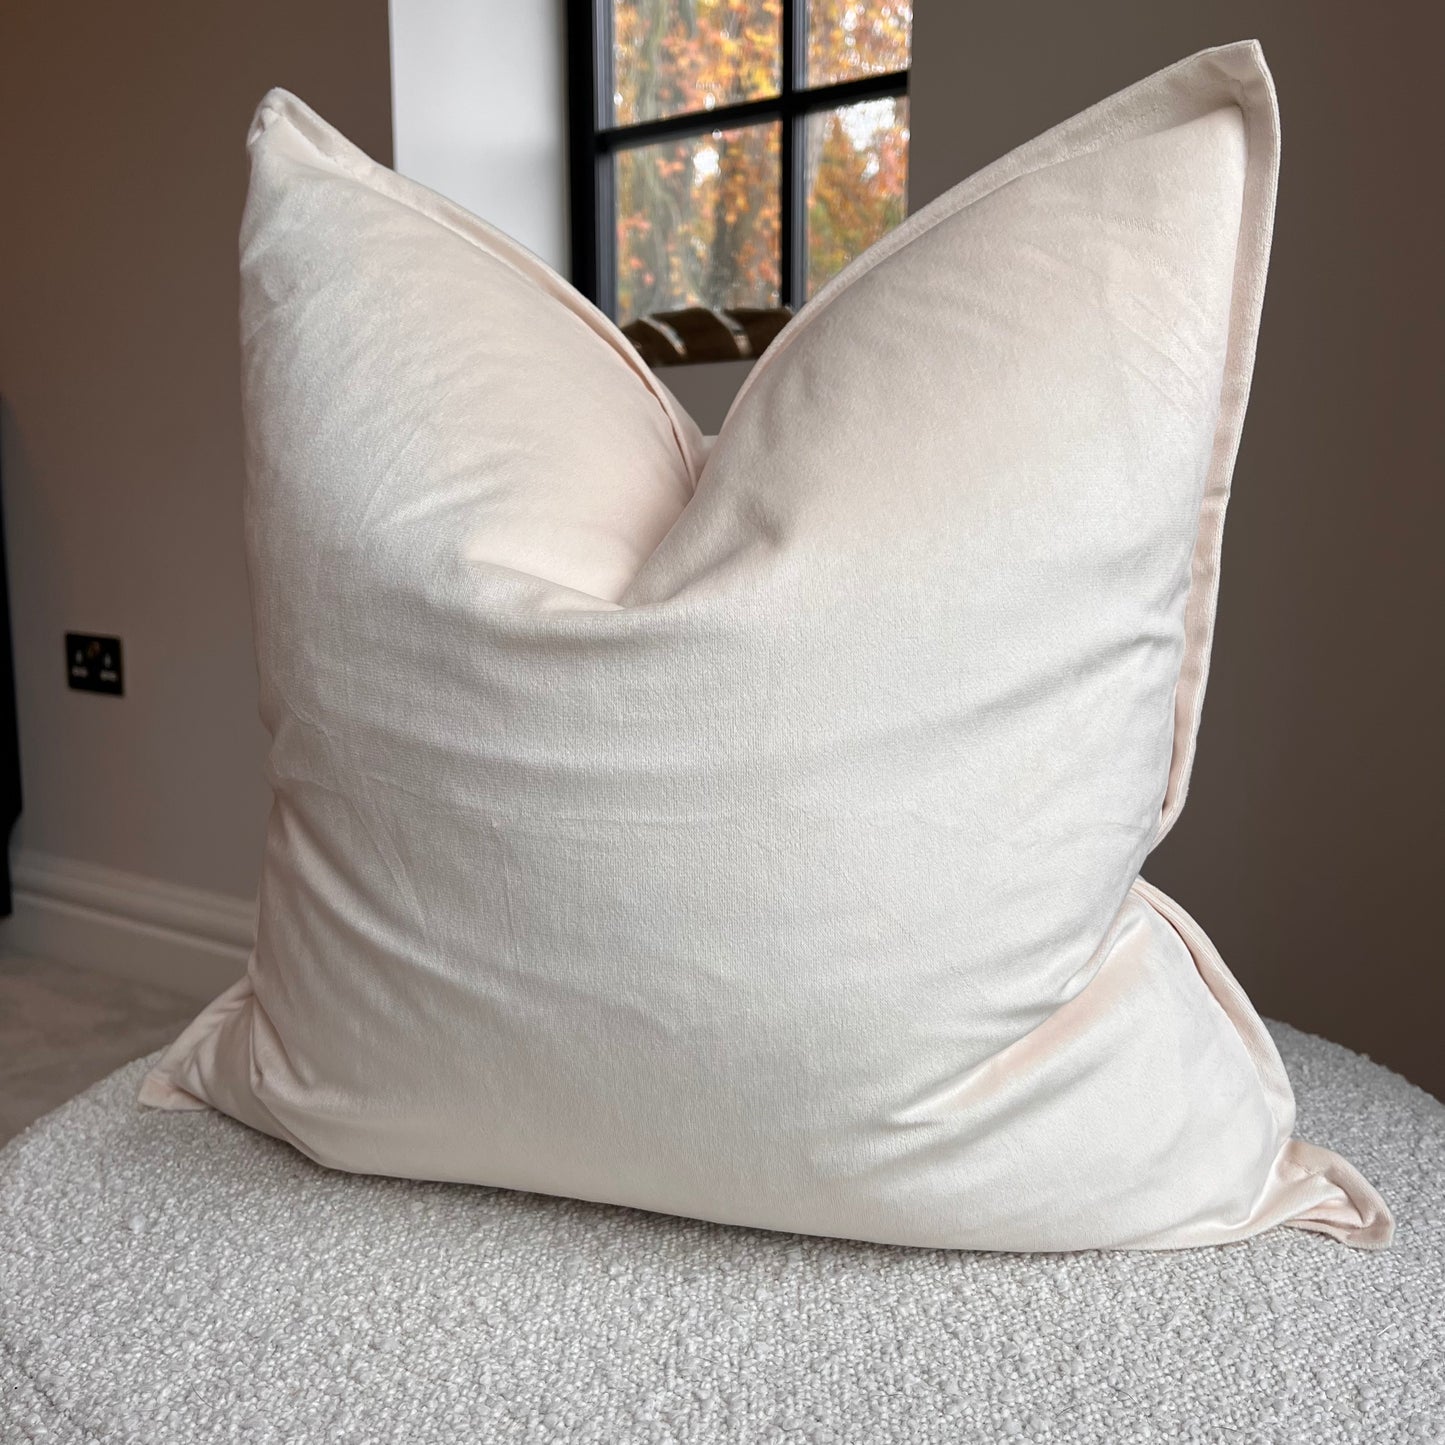 Velvet Cream Beige Cushion with Square Edging - PRE ORDER